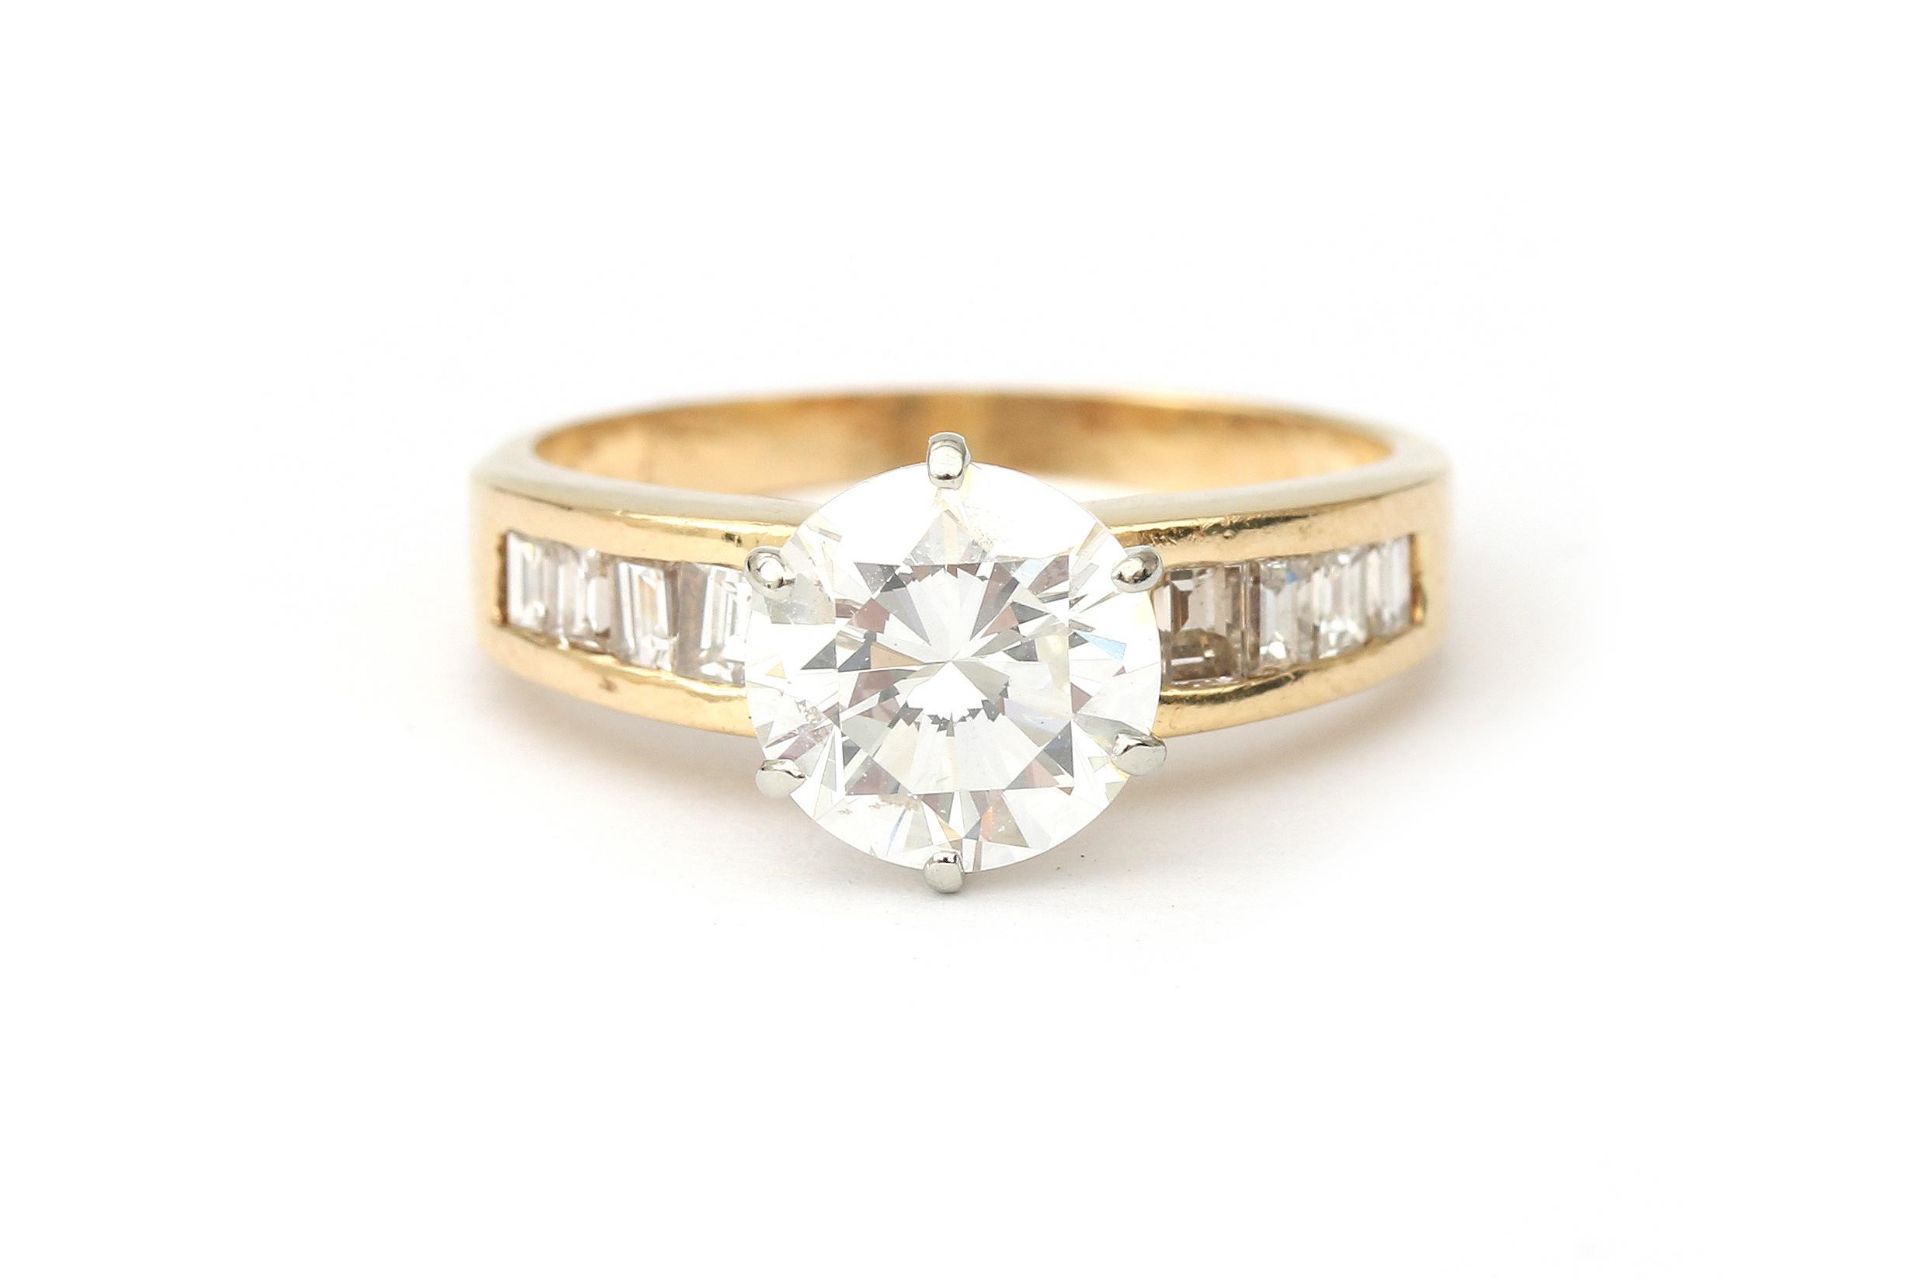 An 18 karat gold diamond solitaire ring, 1.92 ct.